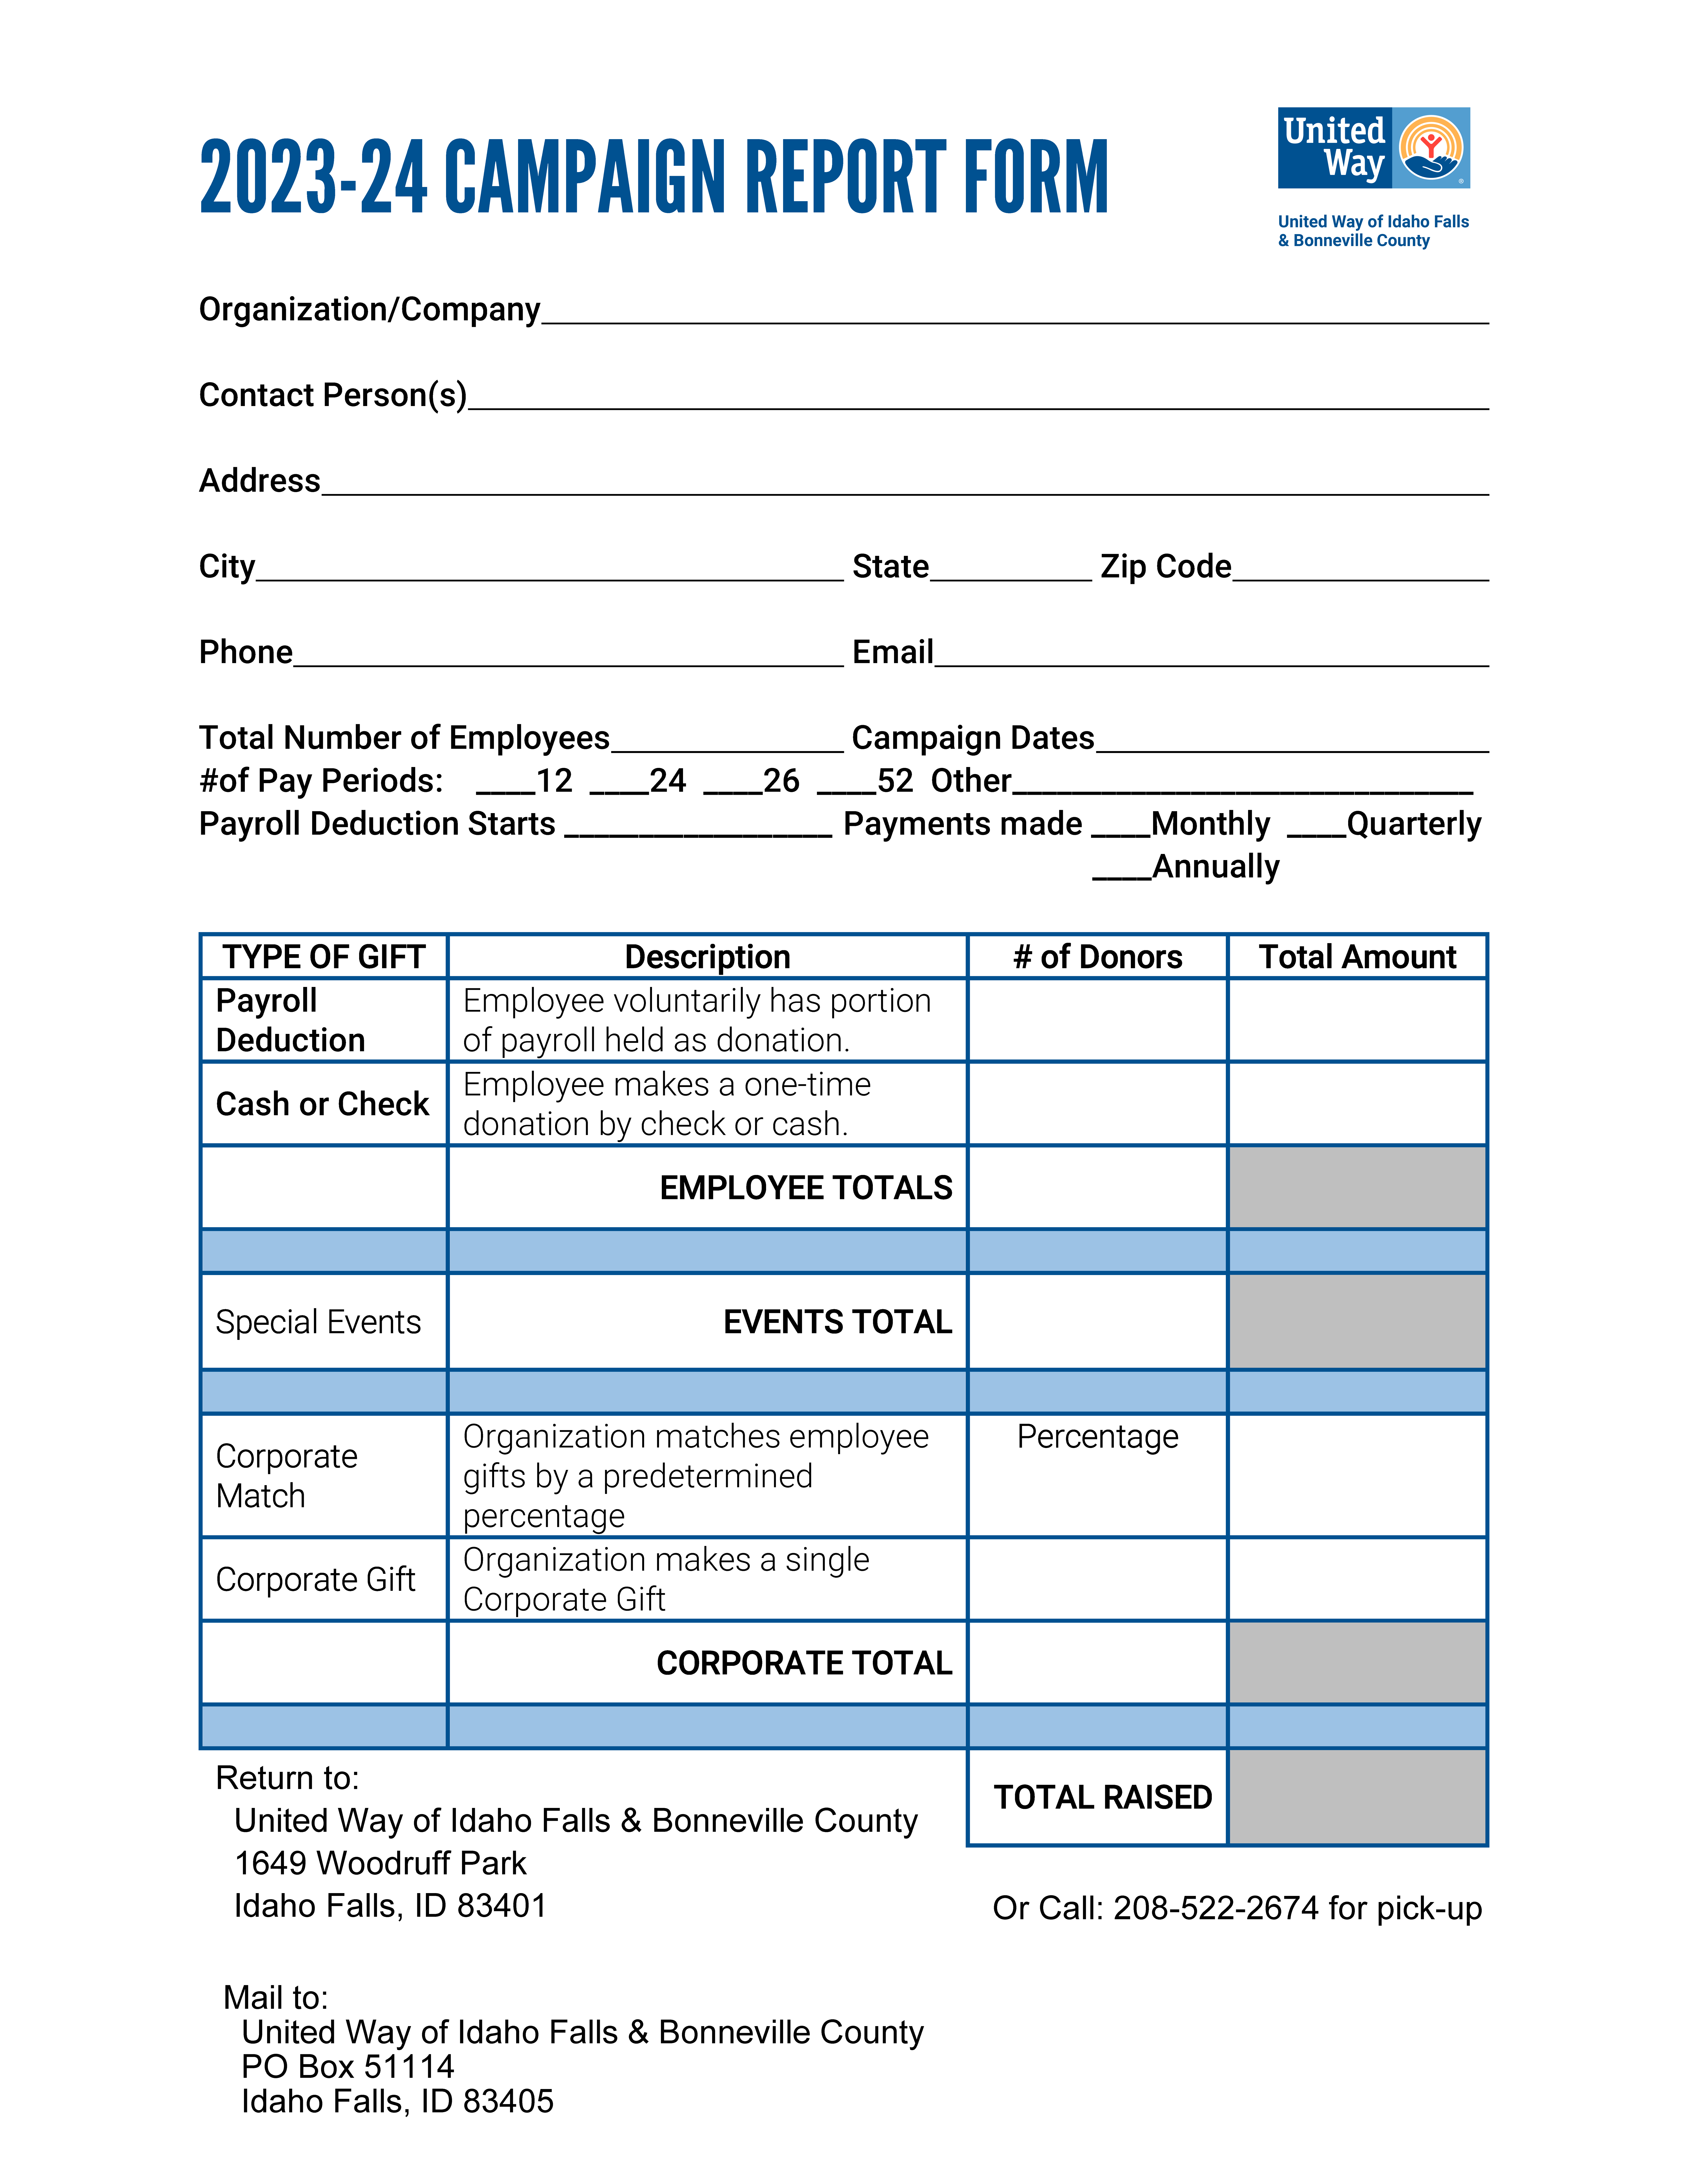 2023 Campaign Report Form